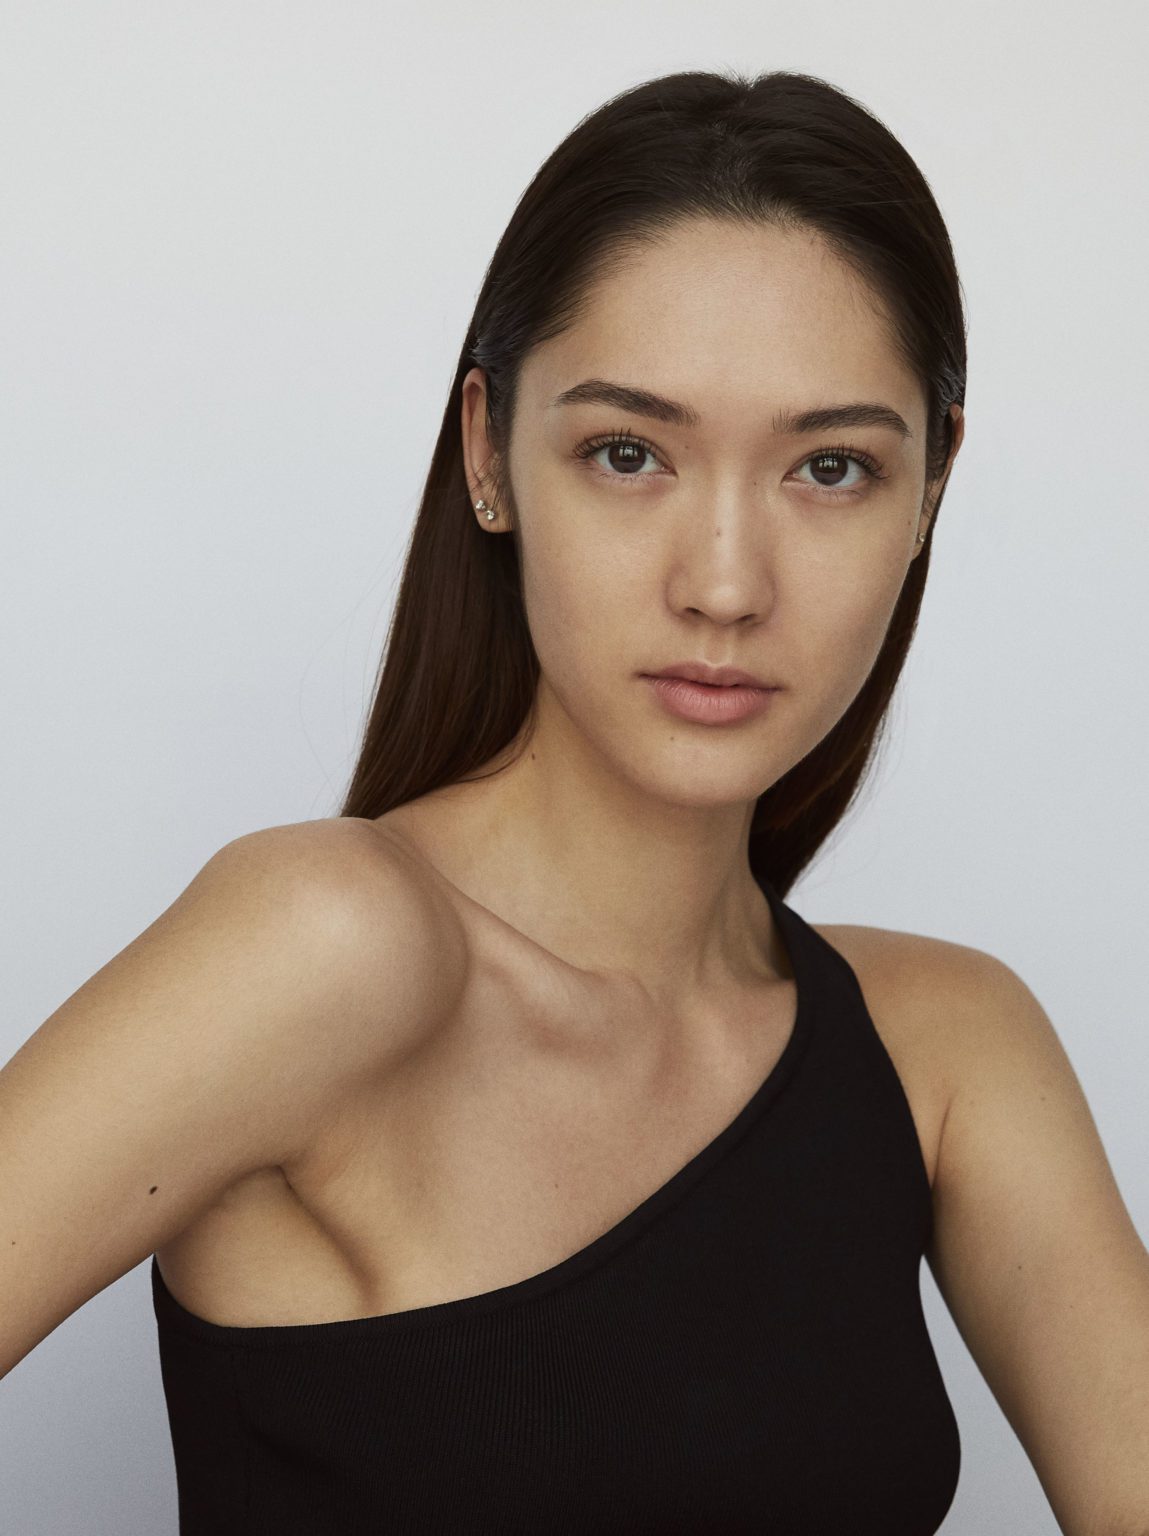 Female Models | Basic Models: Singapore Modelling Agency